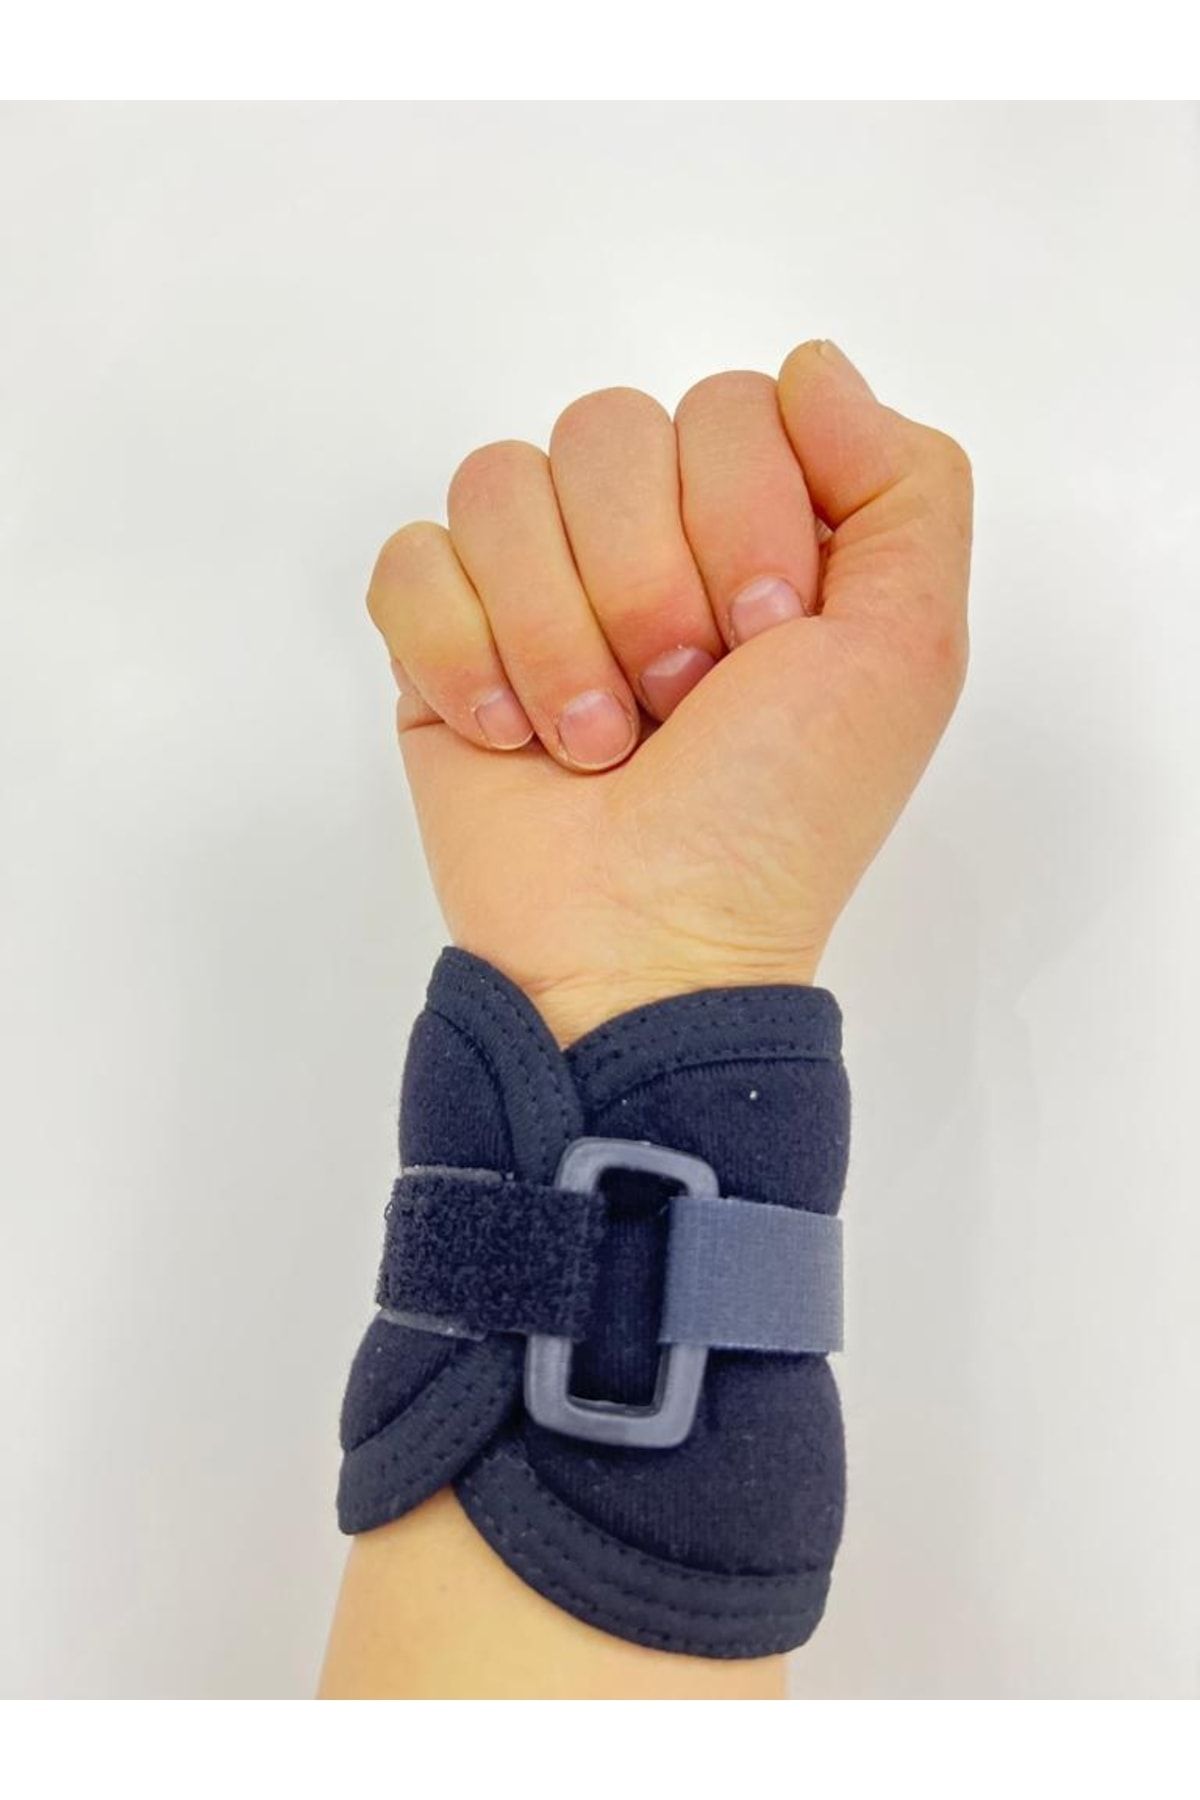 Wrist Brace Wrist Splint Elastic Adjustable Wrist Brace For Sports Sprains